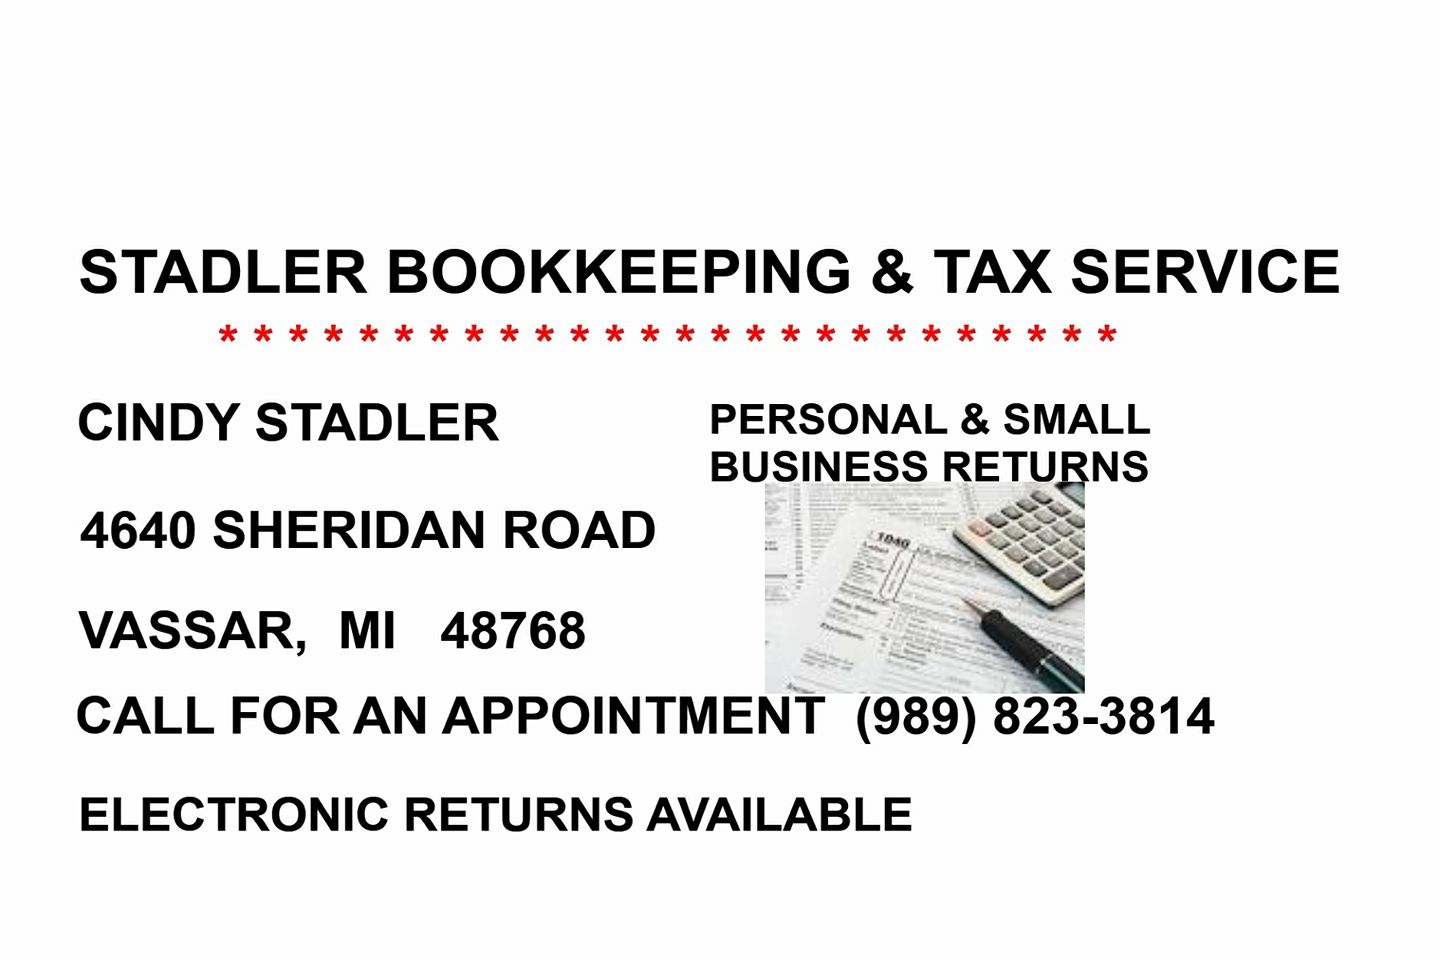 Stadler Bookkeeping & Tax Services 4640 Sheridan Rd, Vassar Michigan 48768